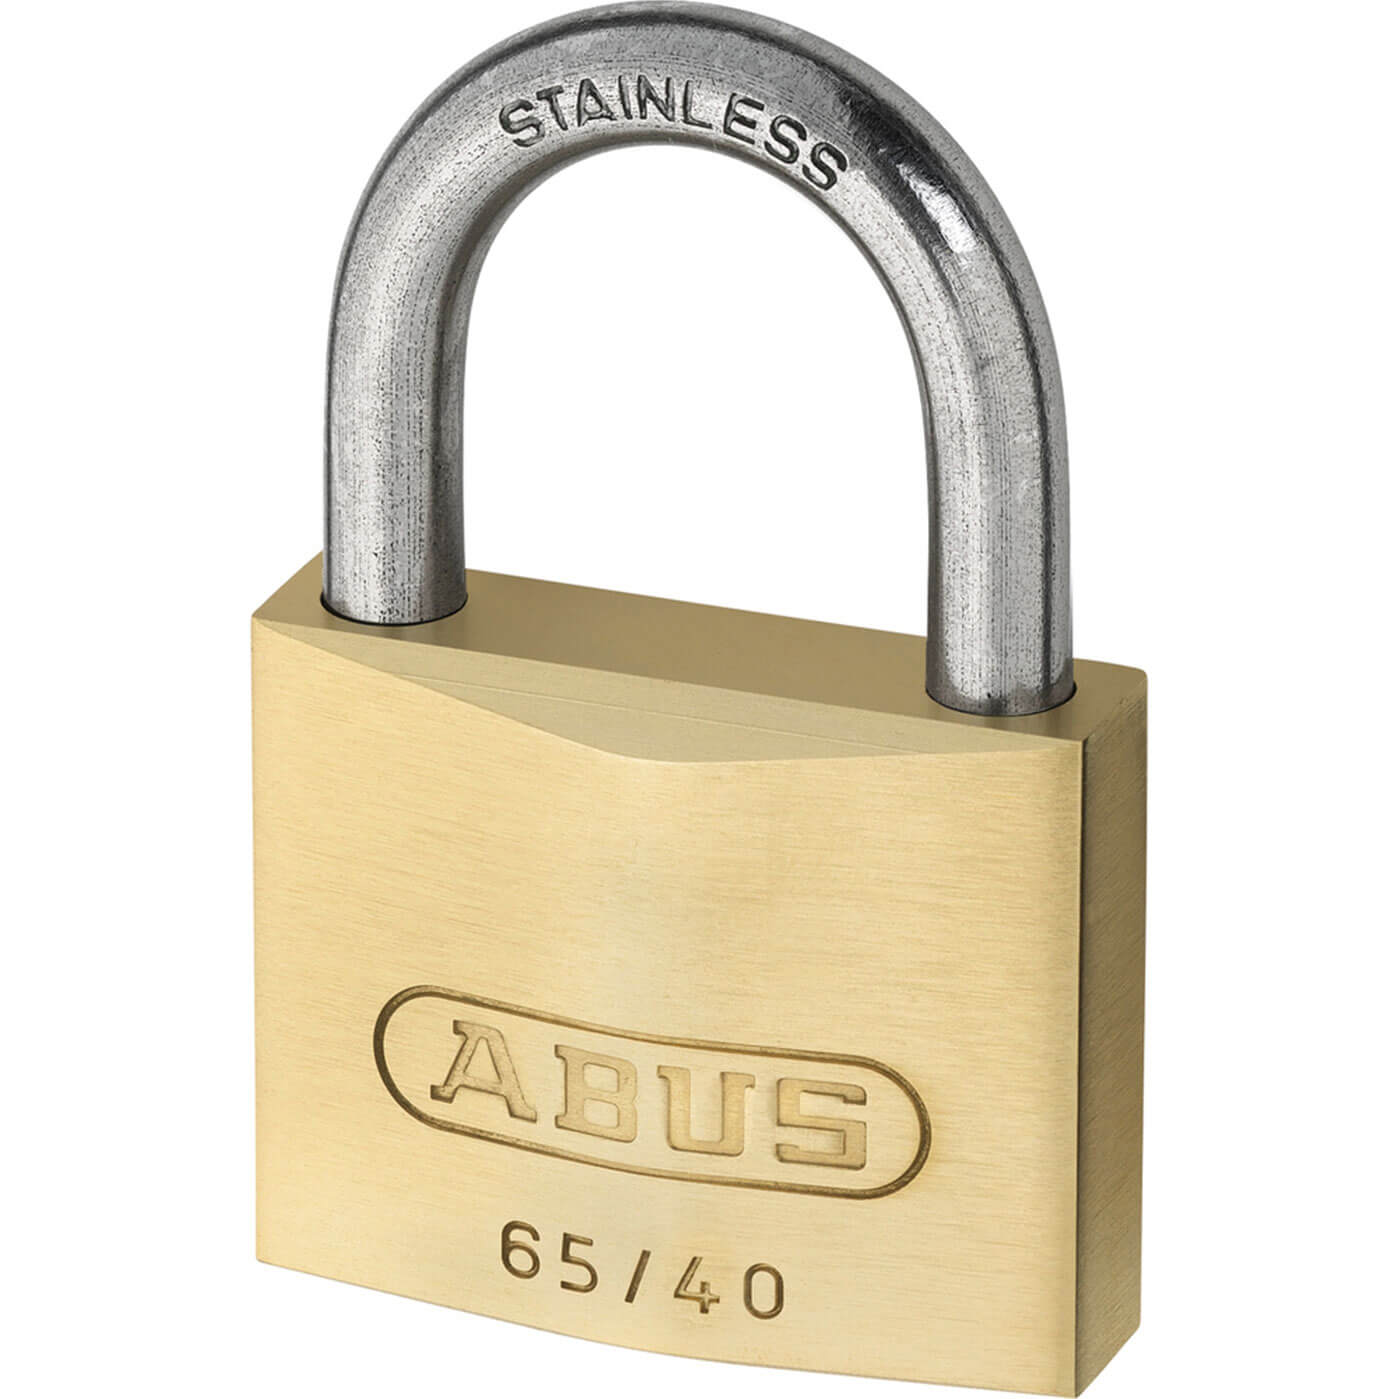 Image of Abus 65 Series Compact Brass Padlock Pack of 2 Keyed Alike 40mm Standard